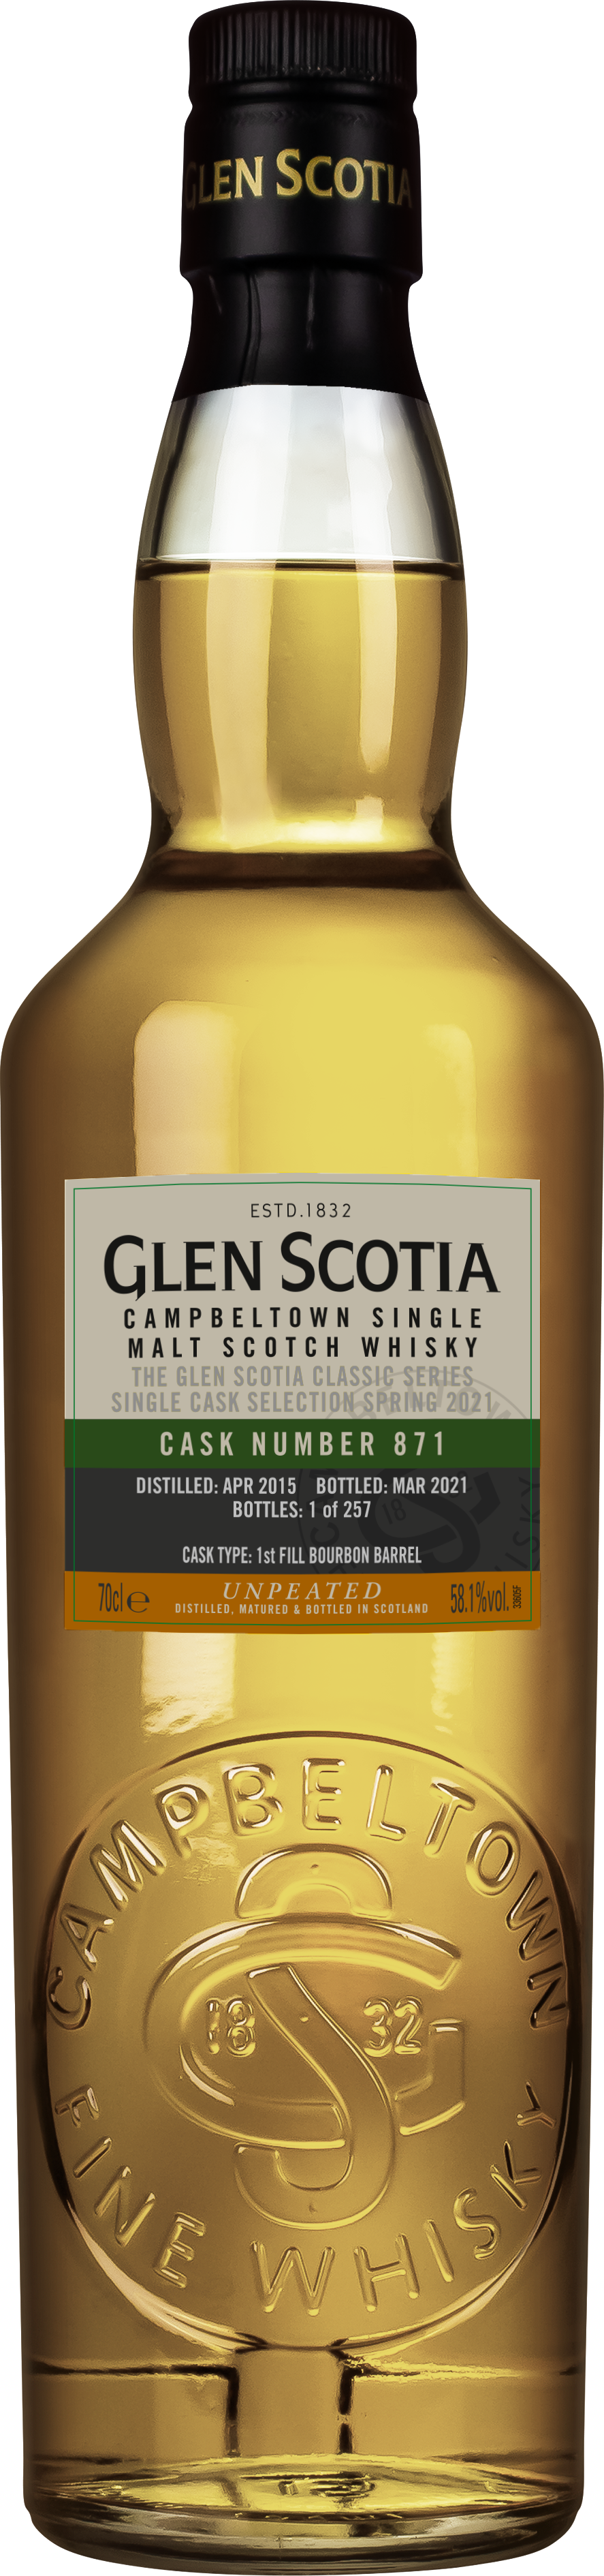 Glen Scotia Vintage 2015 1st Fill Bourbon #4